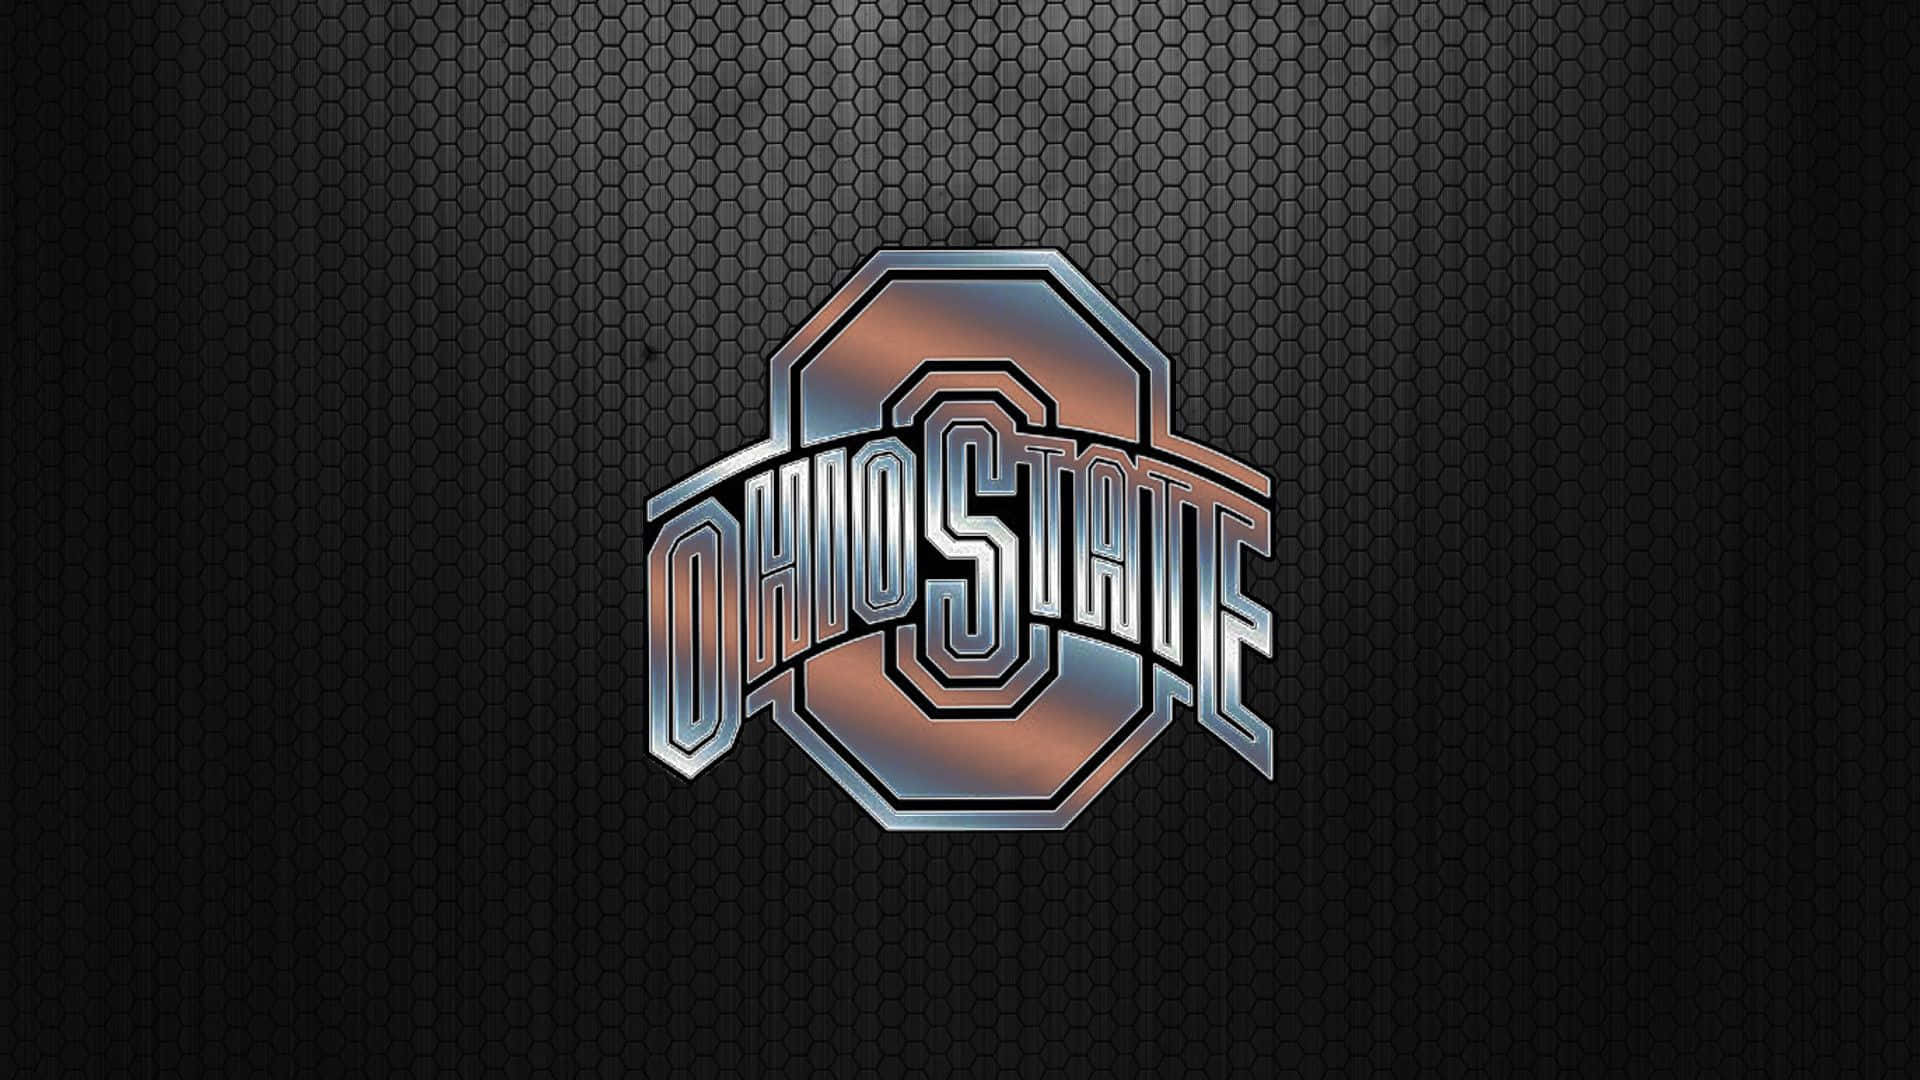 Ohiostate-logotyp Med Skinande Metallisk Yta. Wallpaper